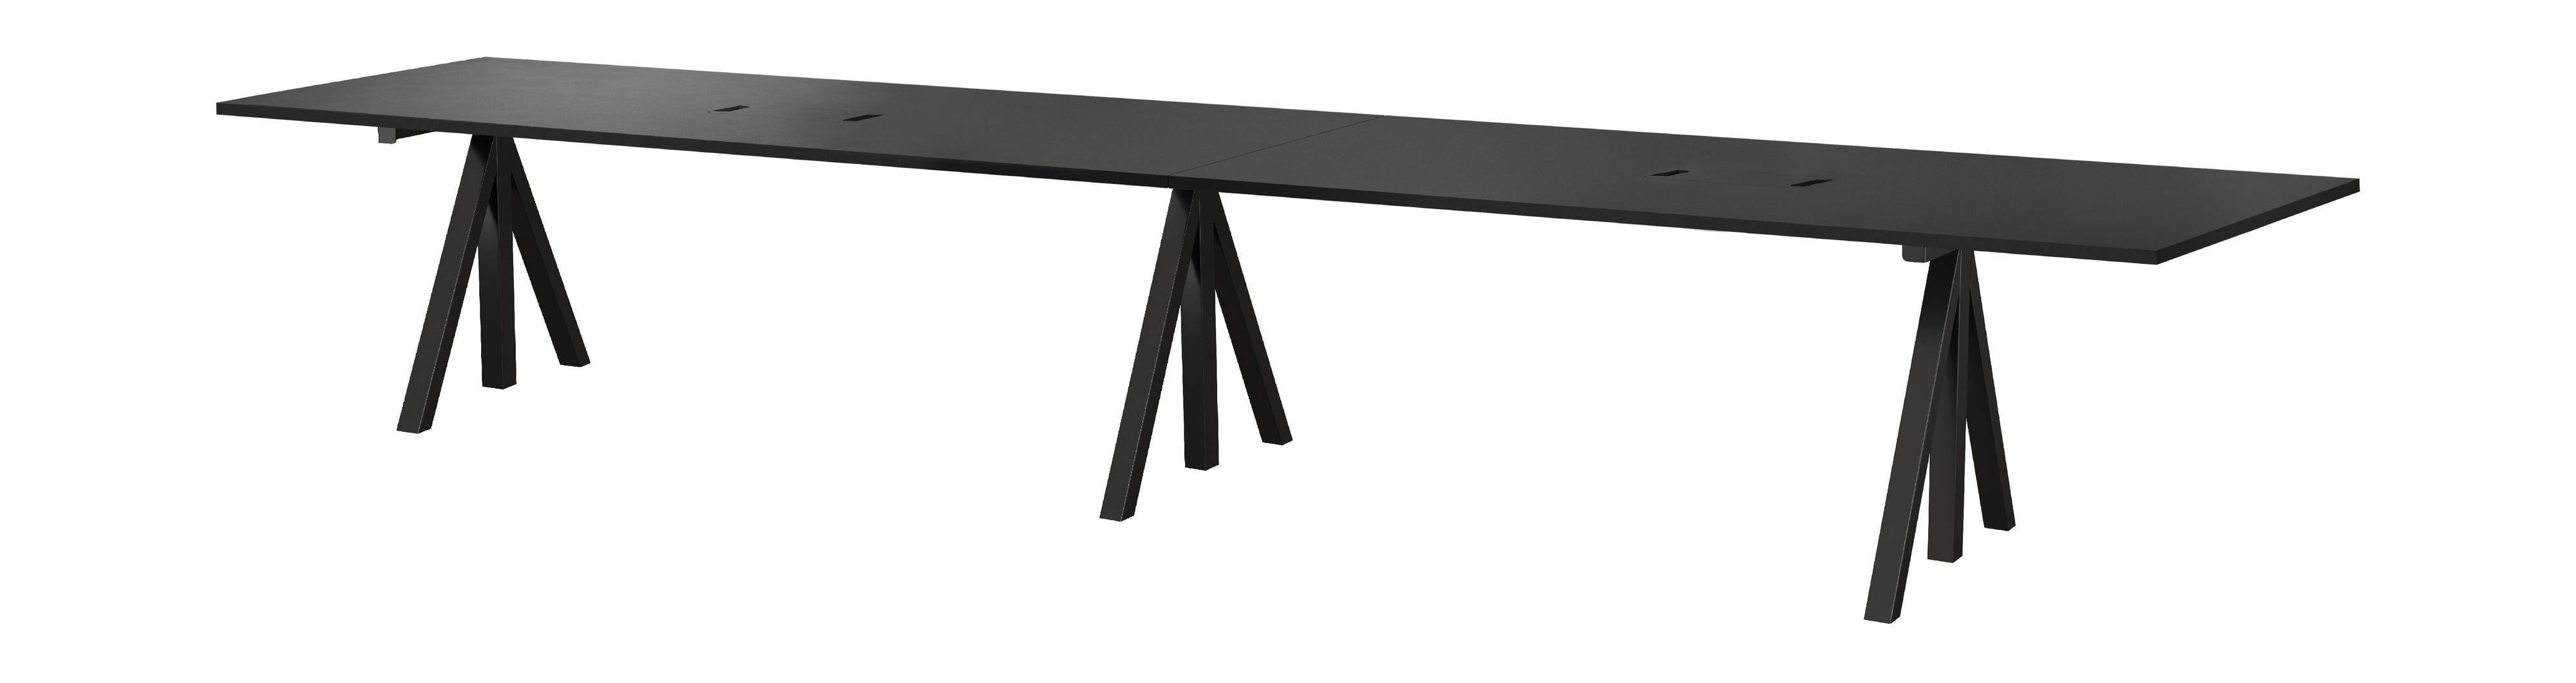 String Furniture Height Adjustable Conference Table 90x180 Cm, Black/Black